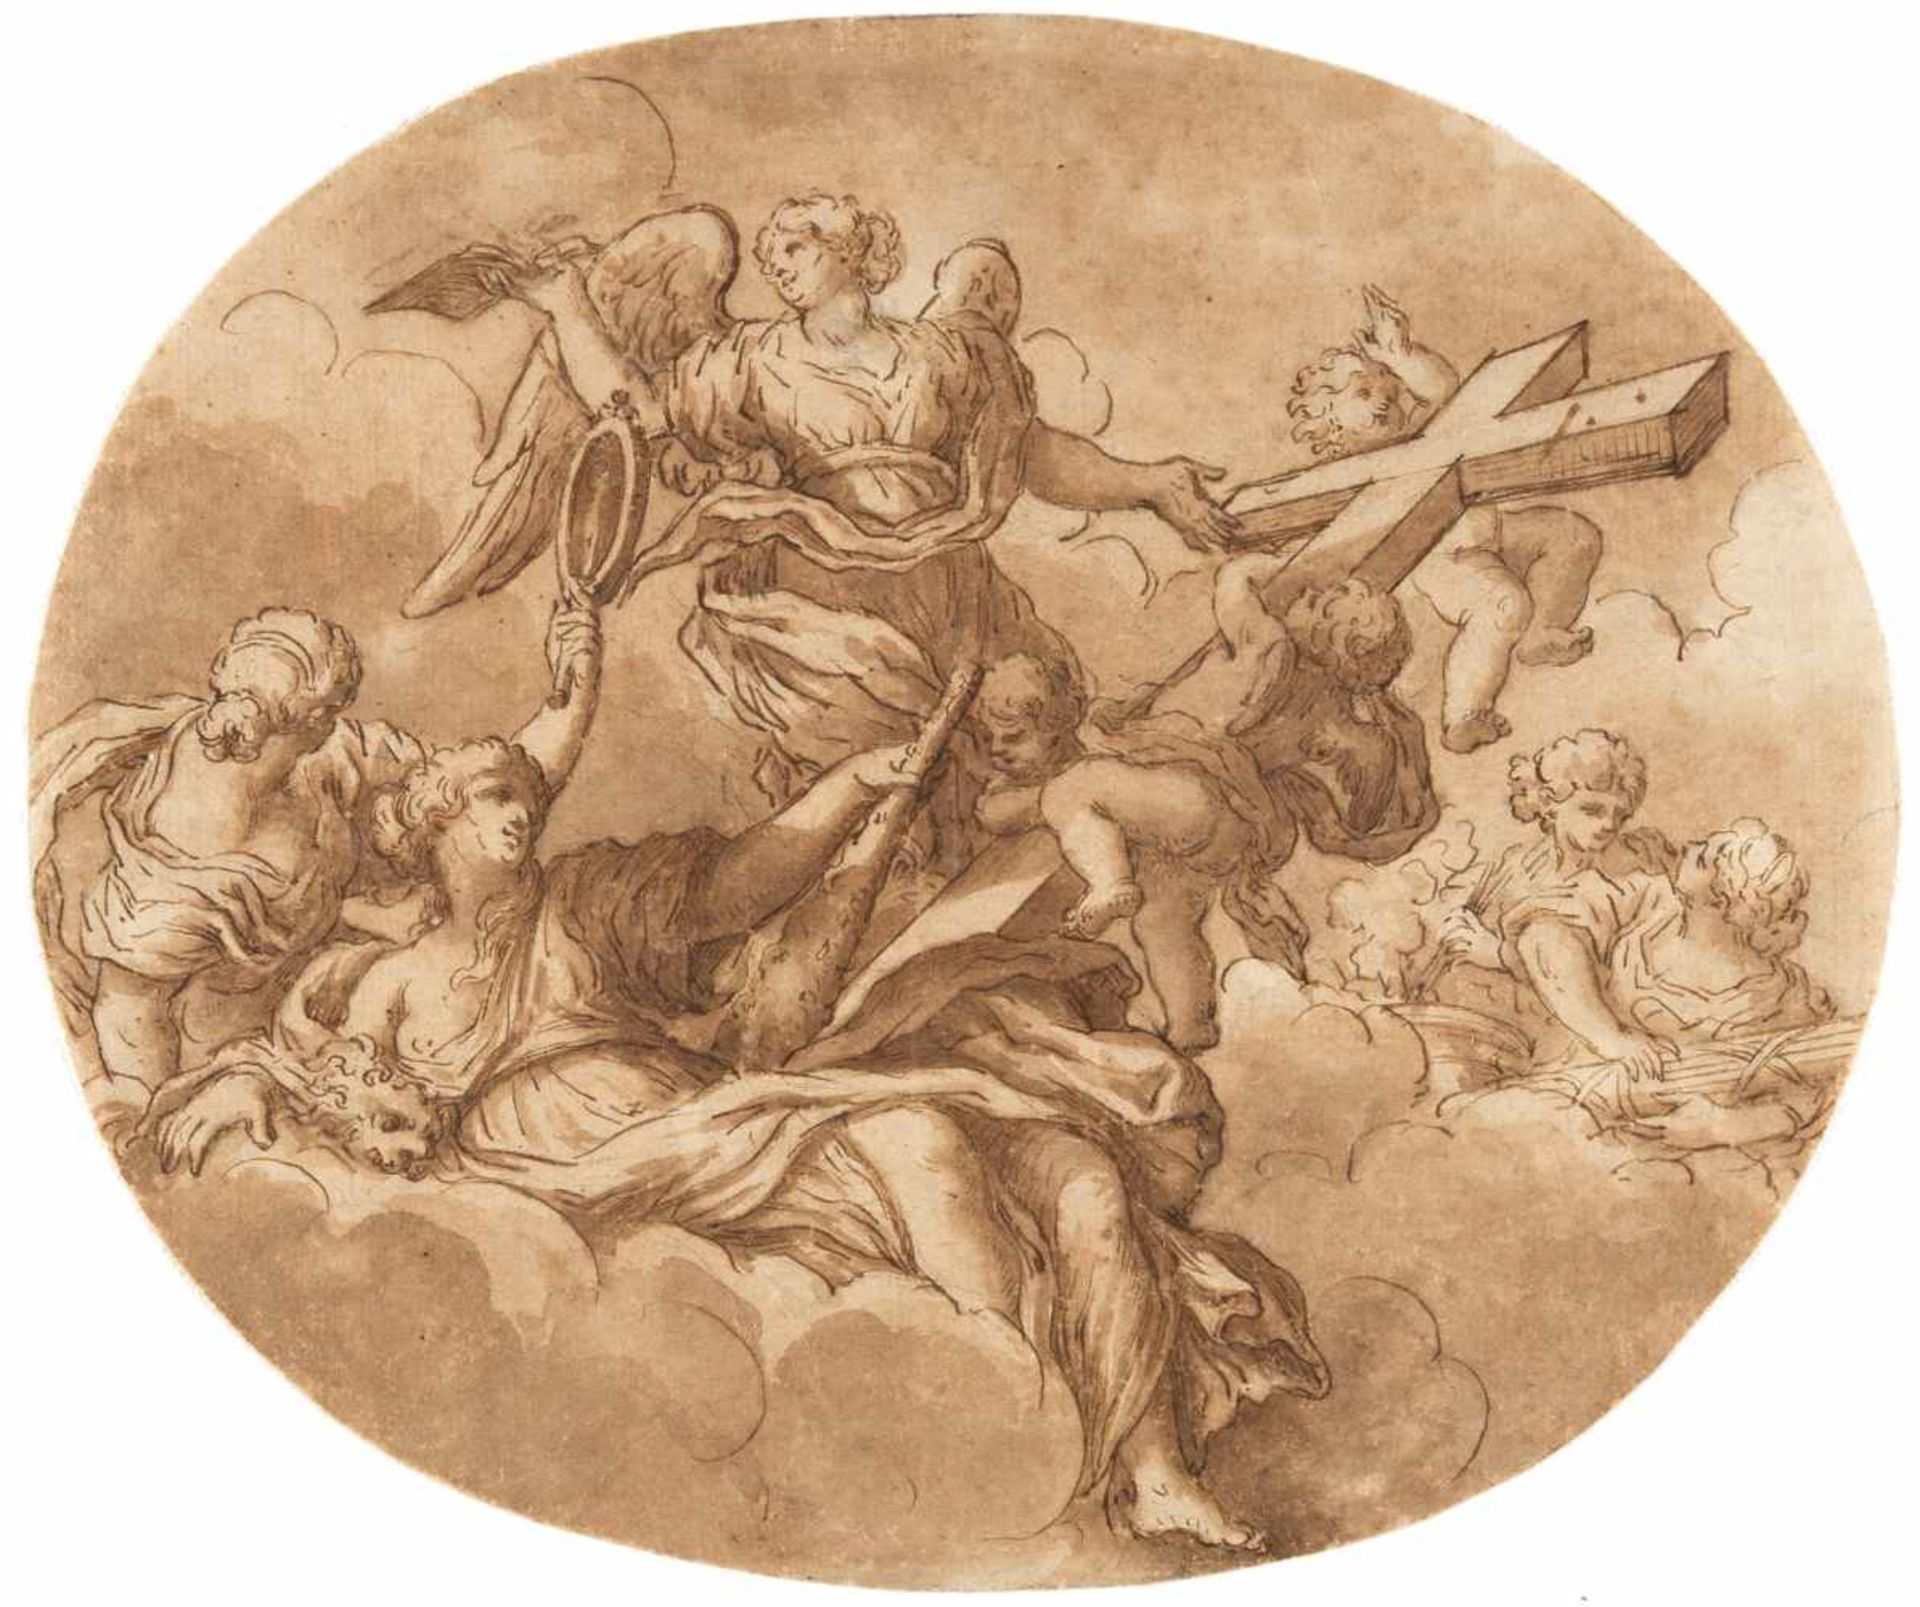 Atanasio Bimbacci1649 Florence - Rome c. 1734Die Kardinaltugenden Fortitudo, Prudentia, Fides und